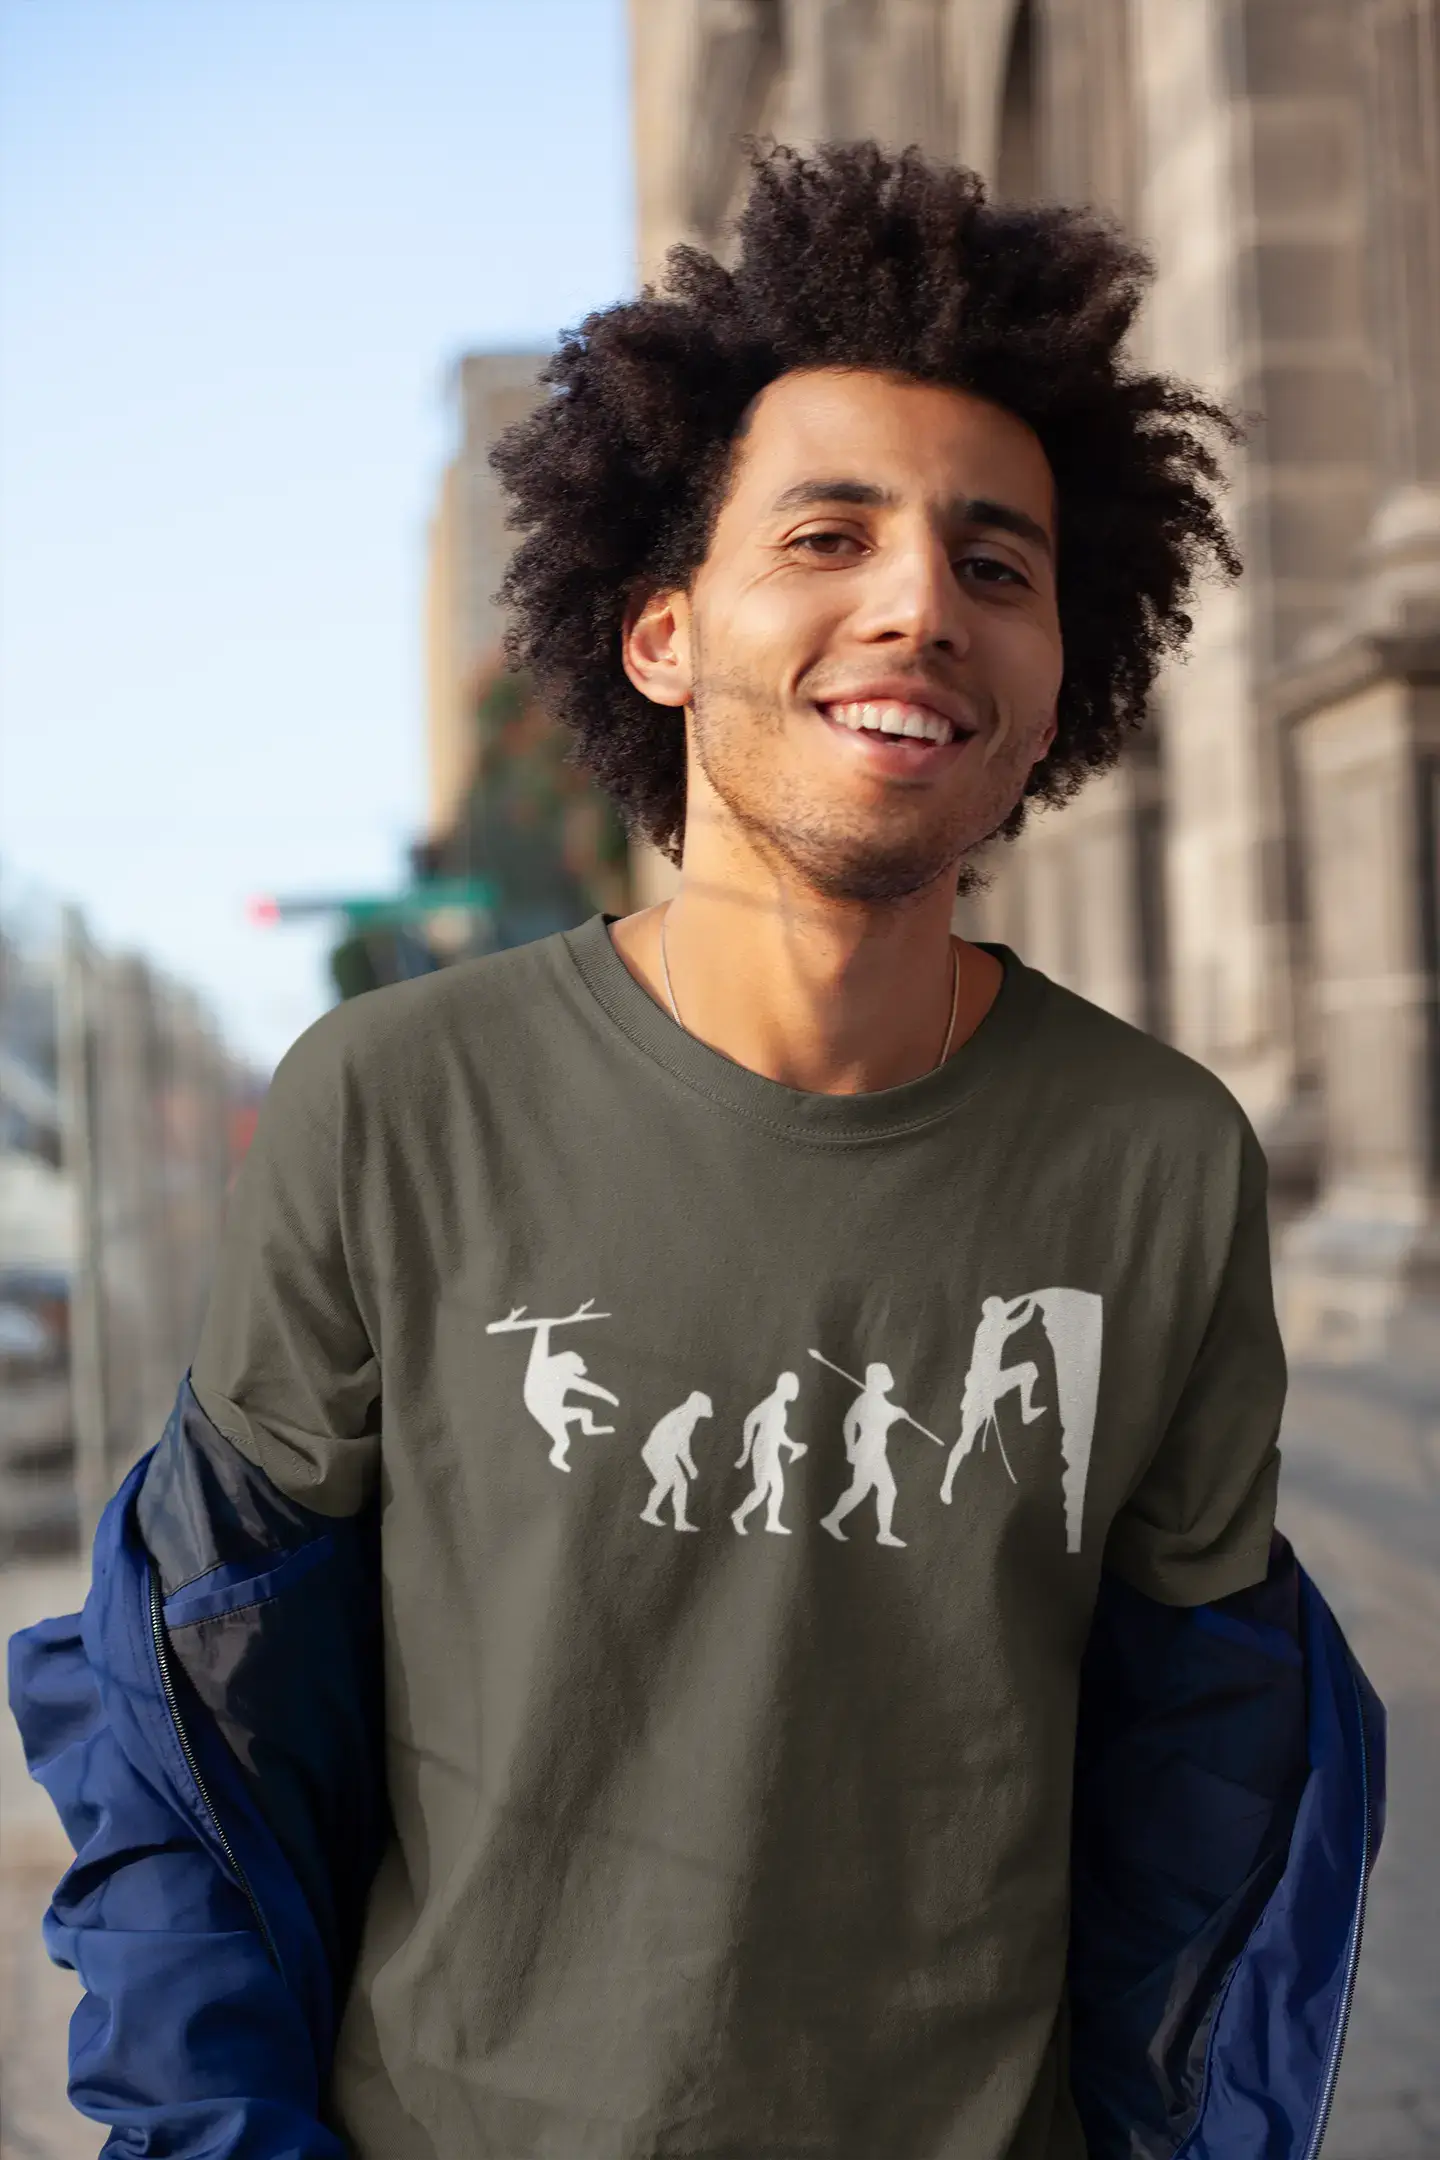 ULTRABASIC - Graphic Printed Men's Climbing Evolution T-Shirt Royal Blue